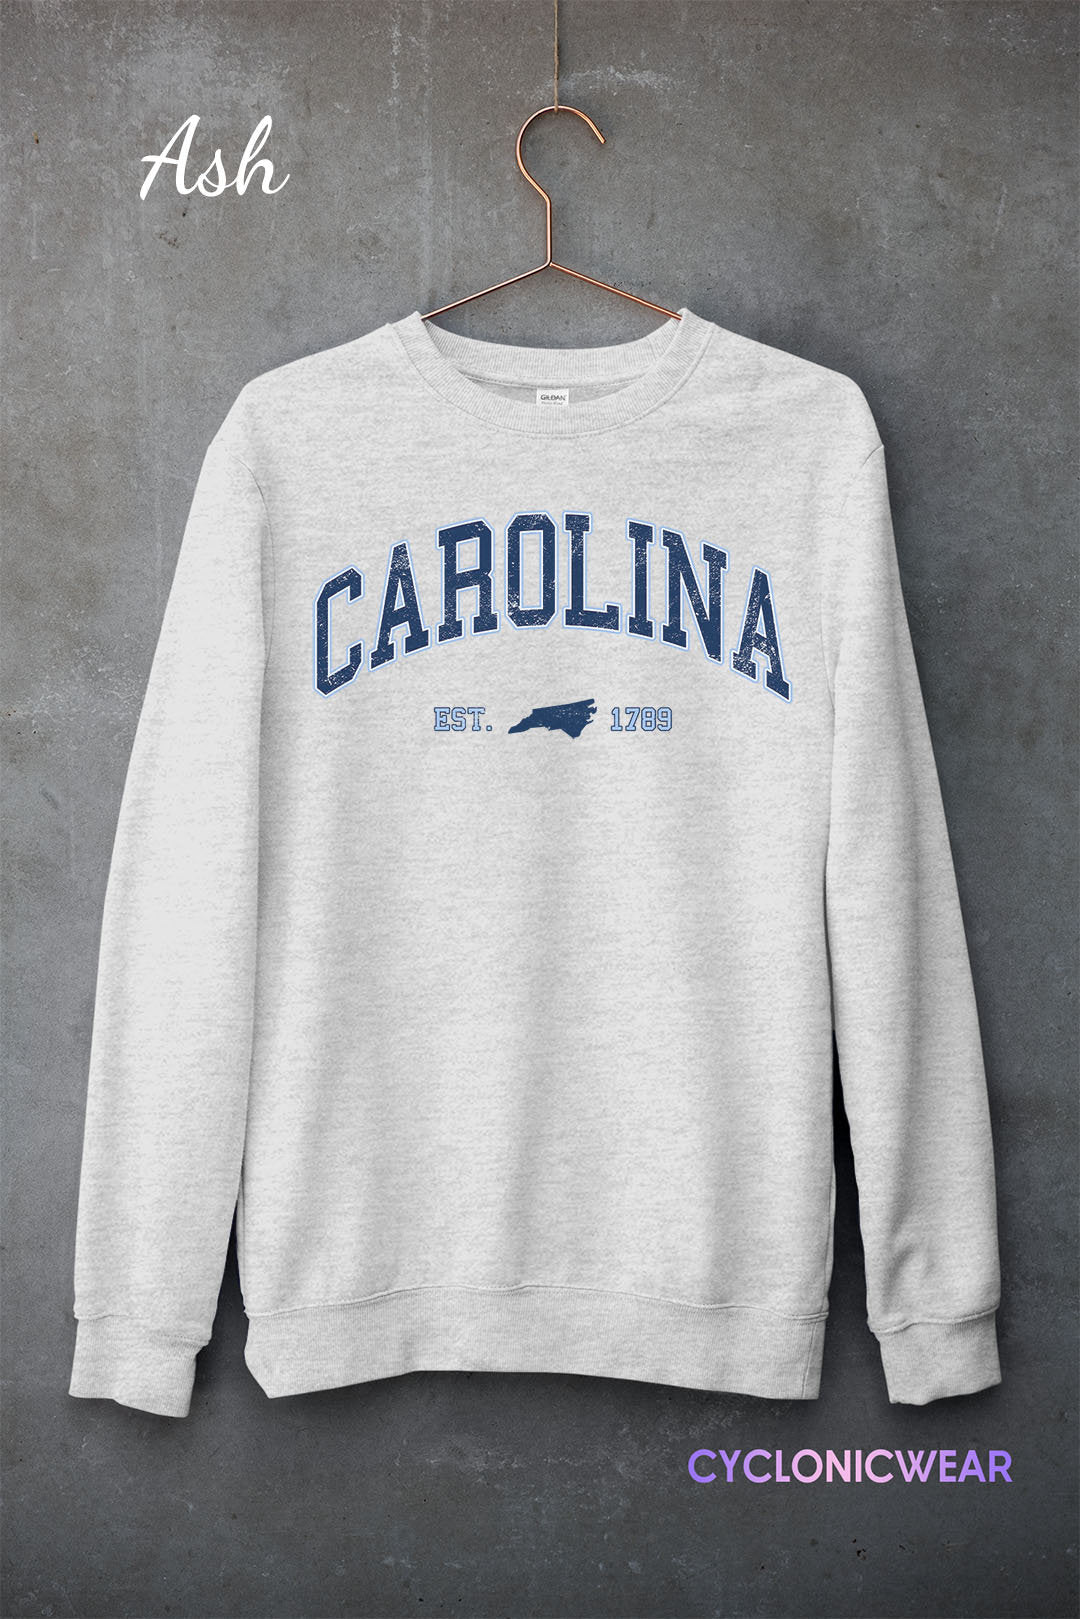 Carolina College Sweatshirt, Vintage Carolina Sweatshirt, Carolina Fan Crewneck, Distressed Carolina Sweatshirt, Carolina Student gift